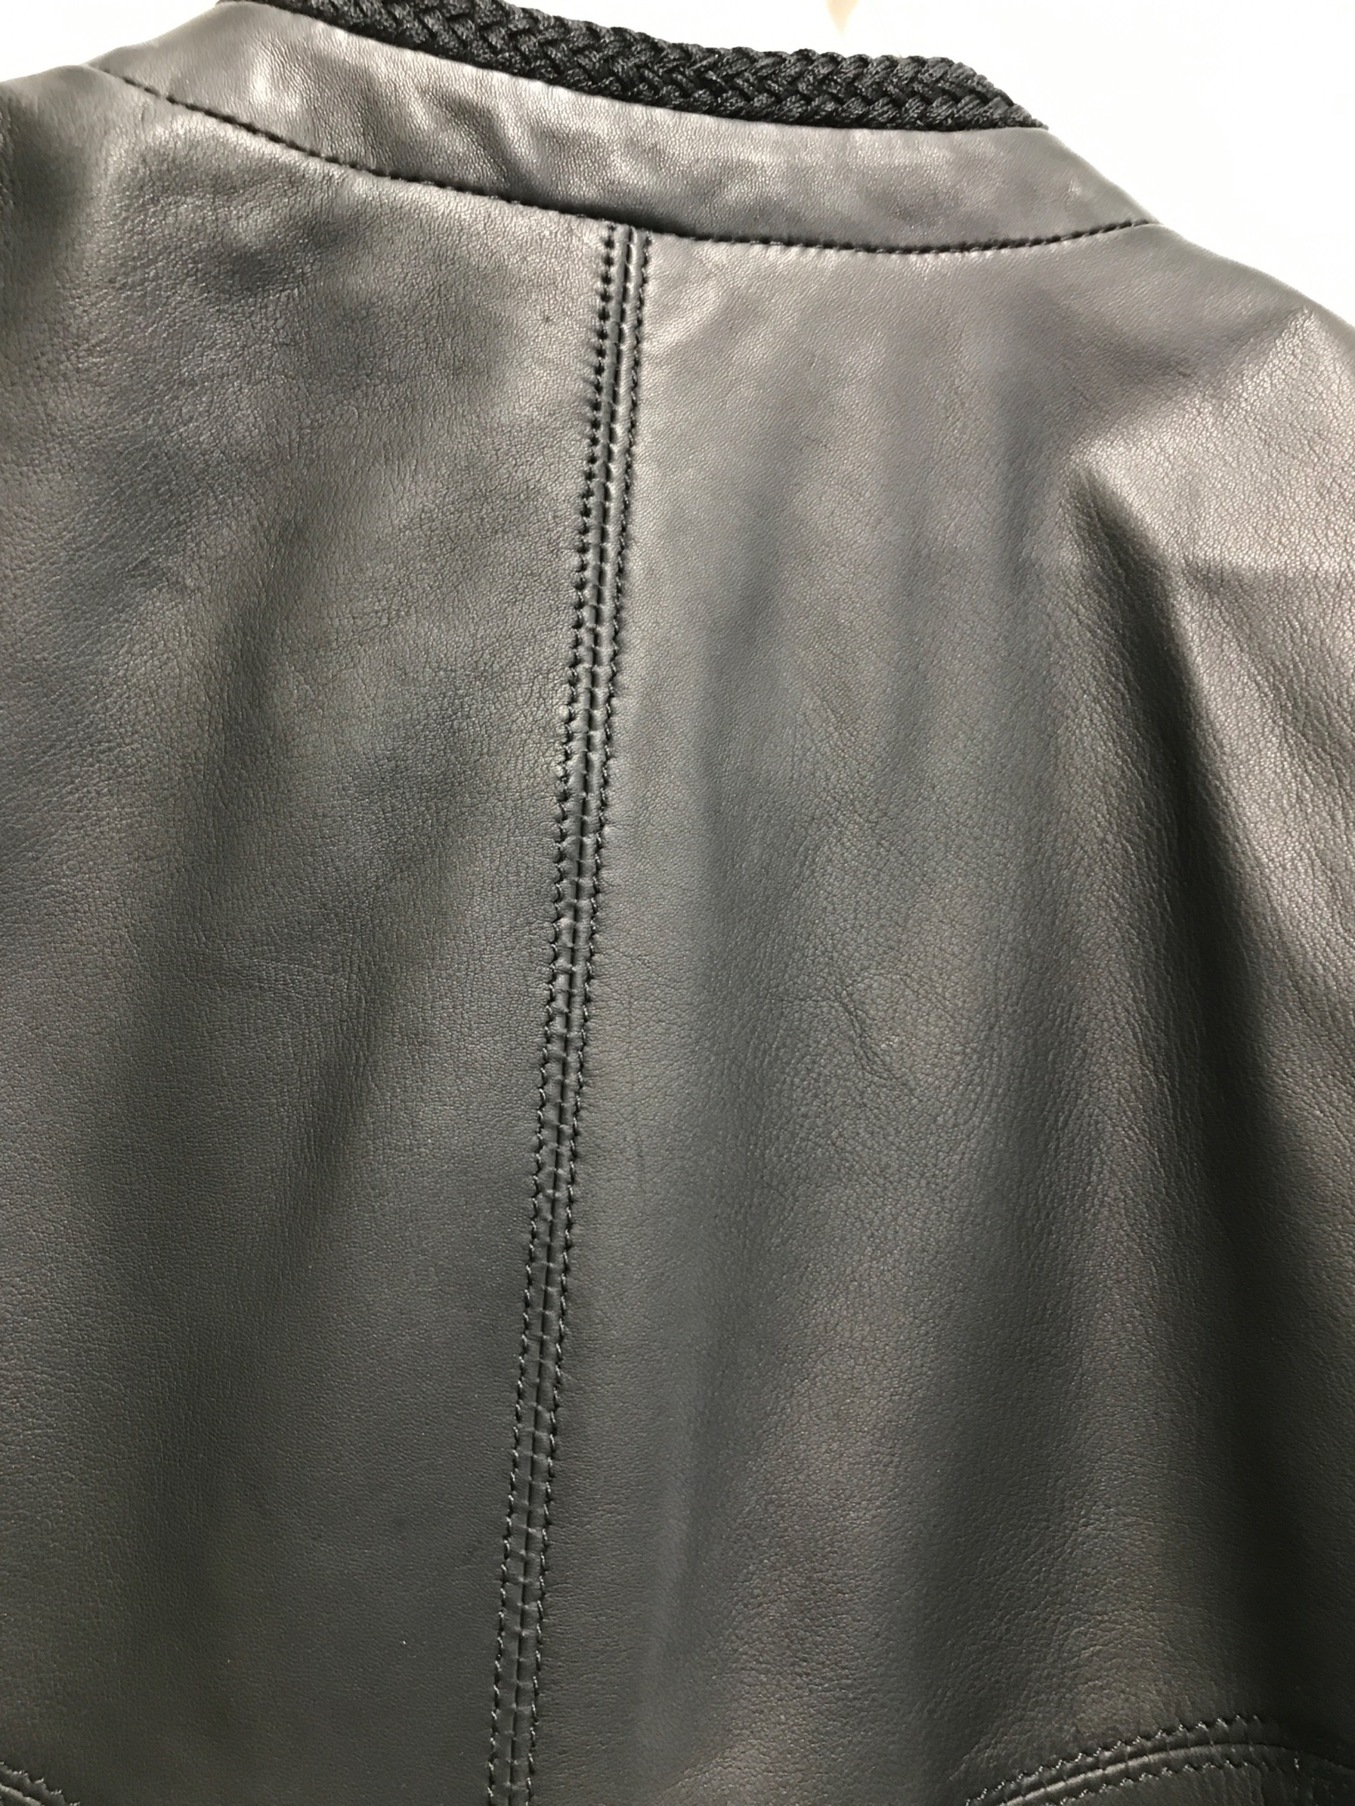 JUST CAVALLI (ジャストカヴァリ) シープスキンレザージャケット ブラック サイズ:42